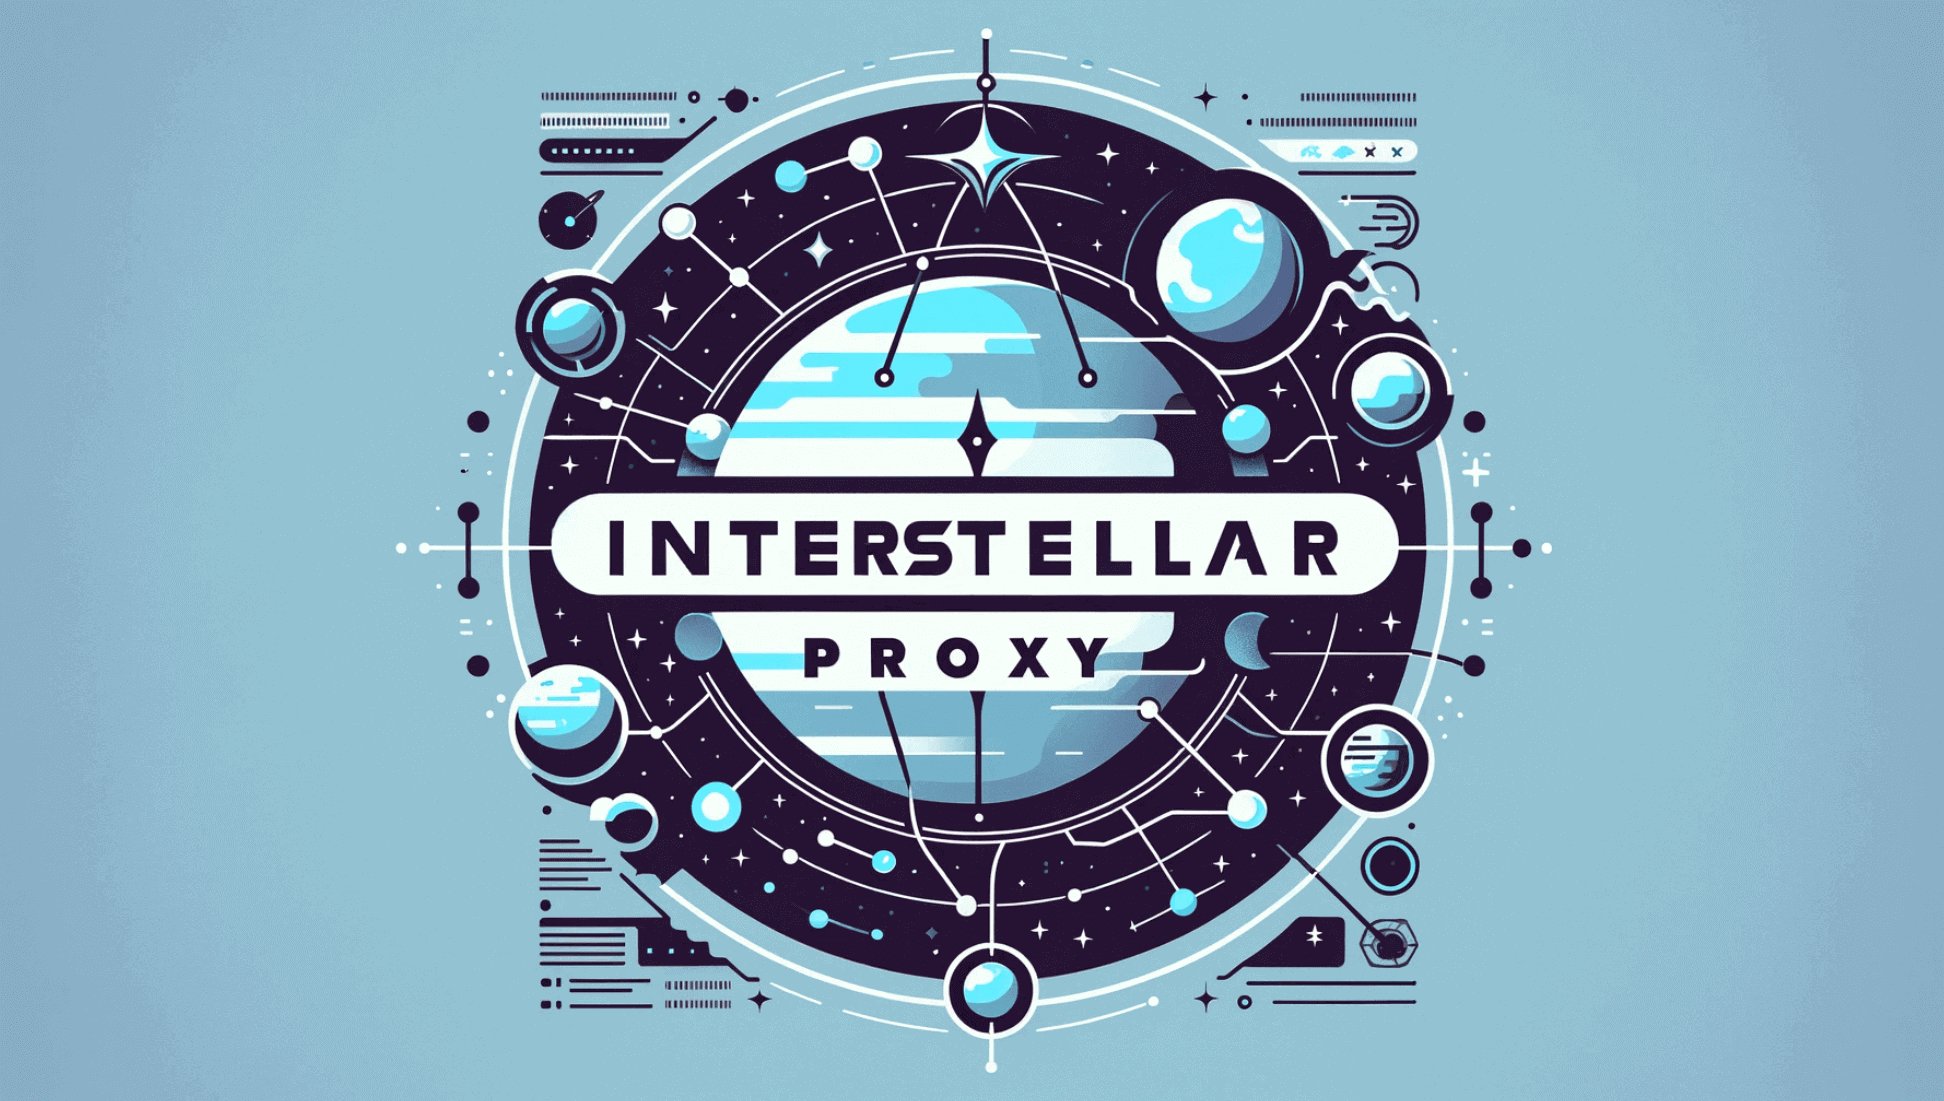 Interstellar Proxy